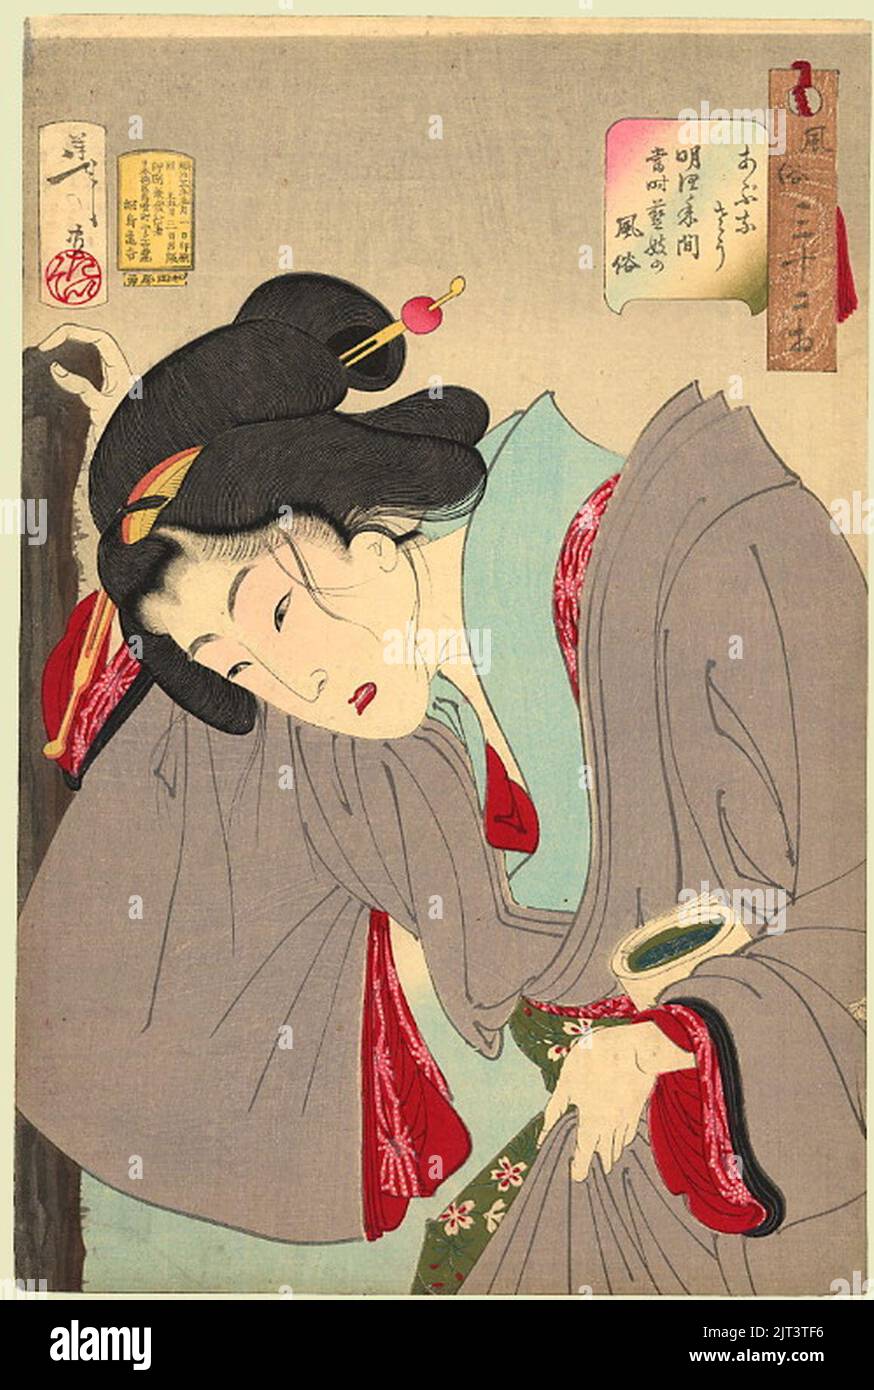 Tsukioka Yoshitoshi - Looking like a dangerous situation - the appearance of a contemporary geisha of the Meiji era. Stock Photo